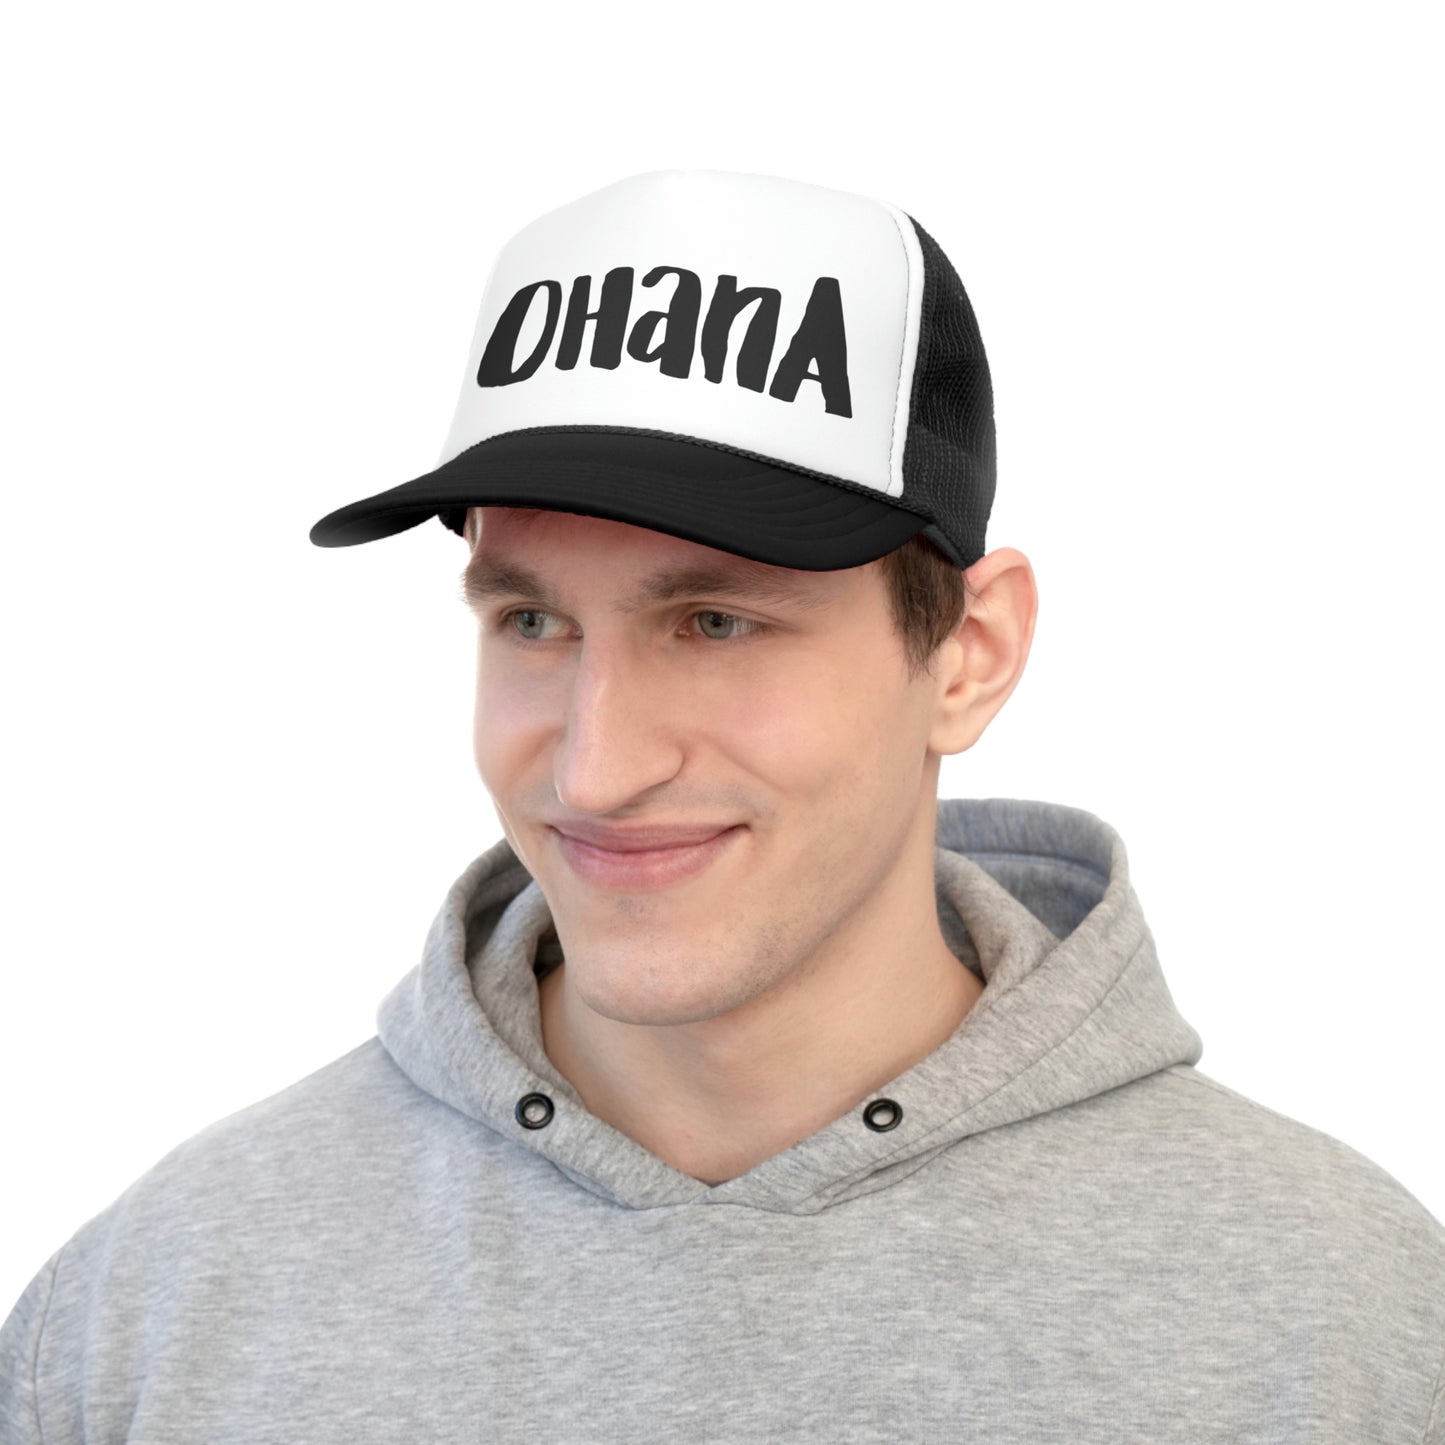 Ohana Hats